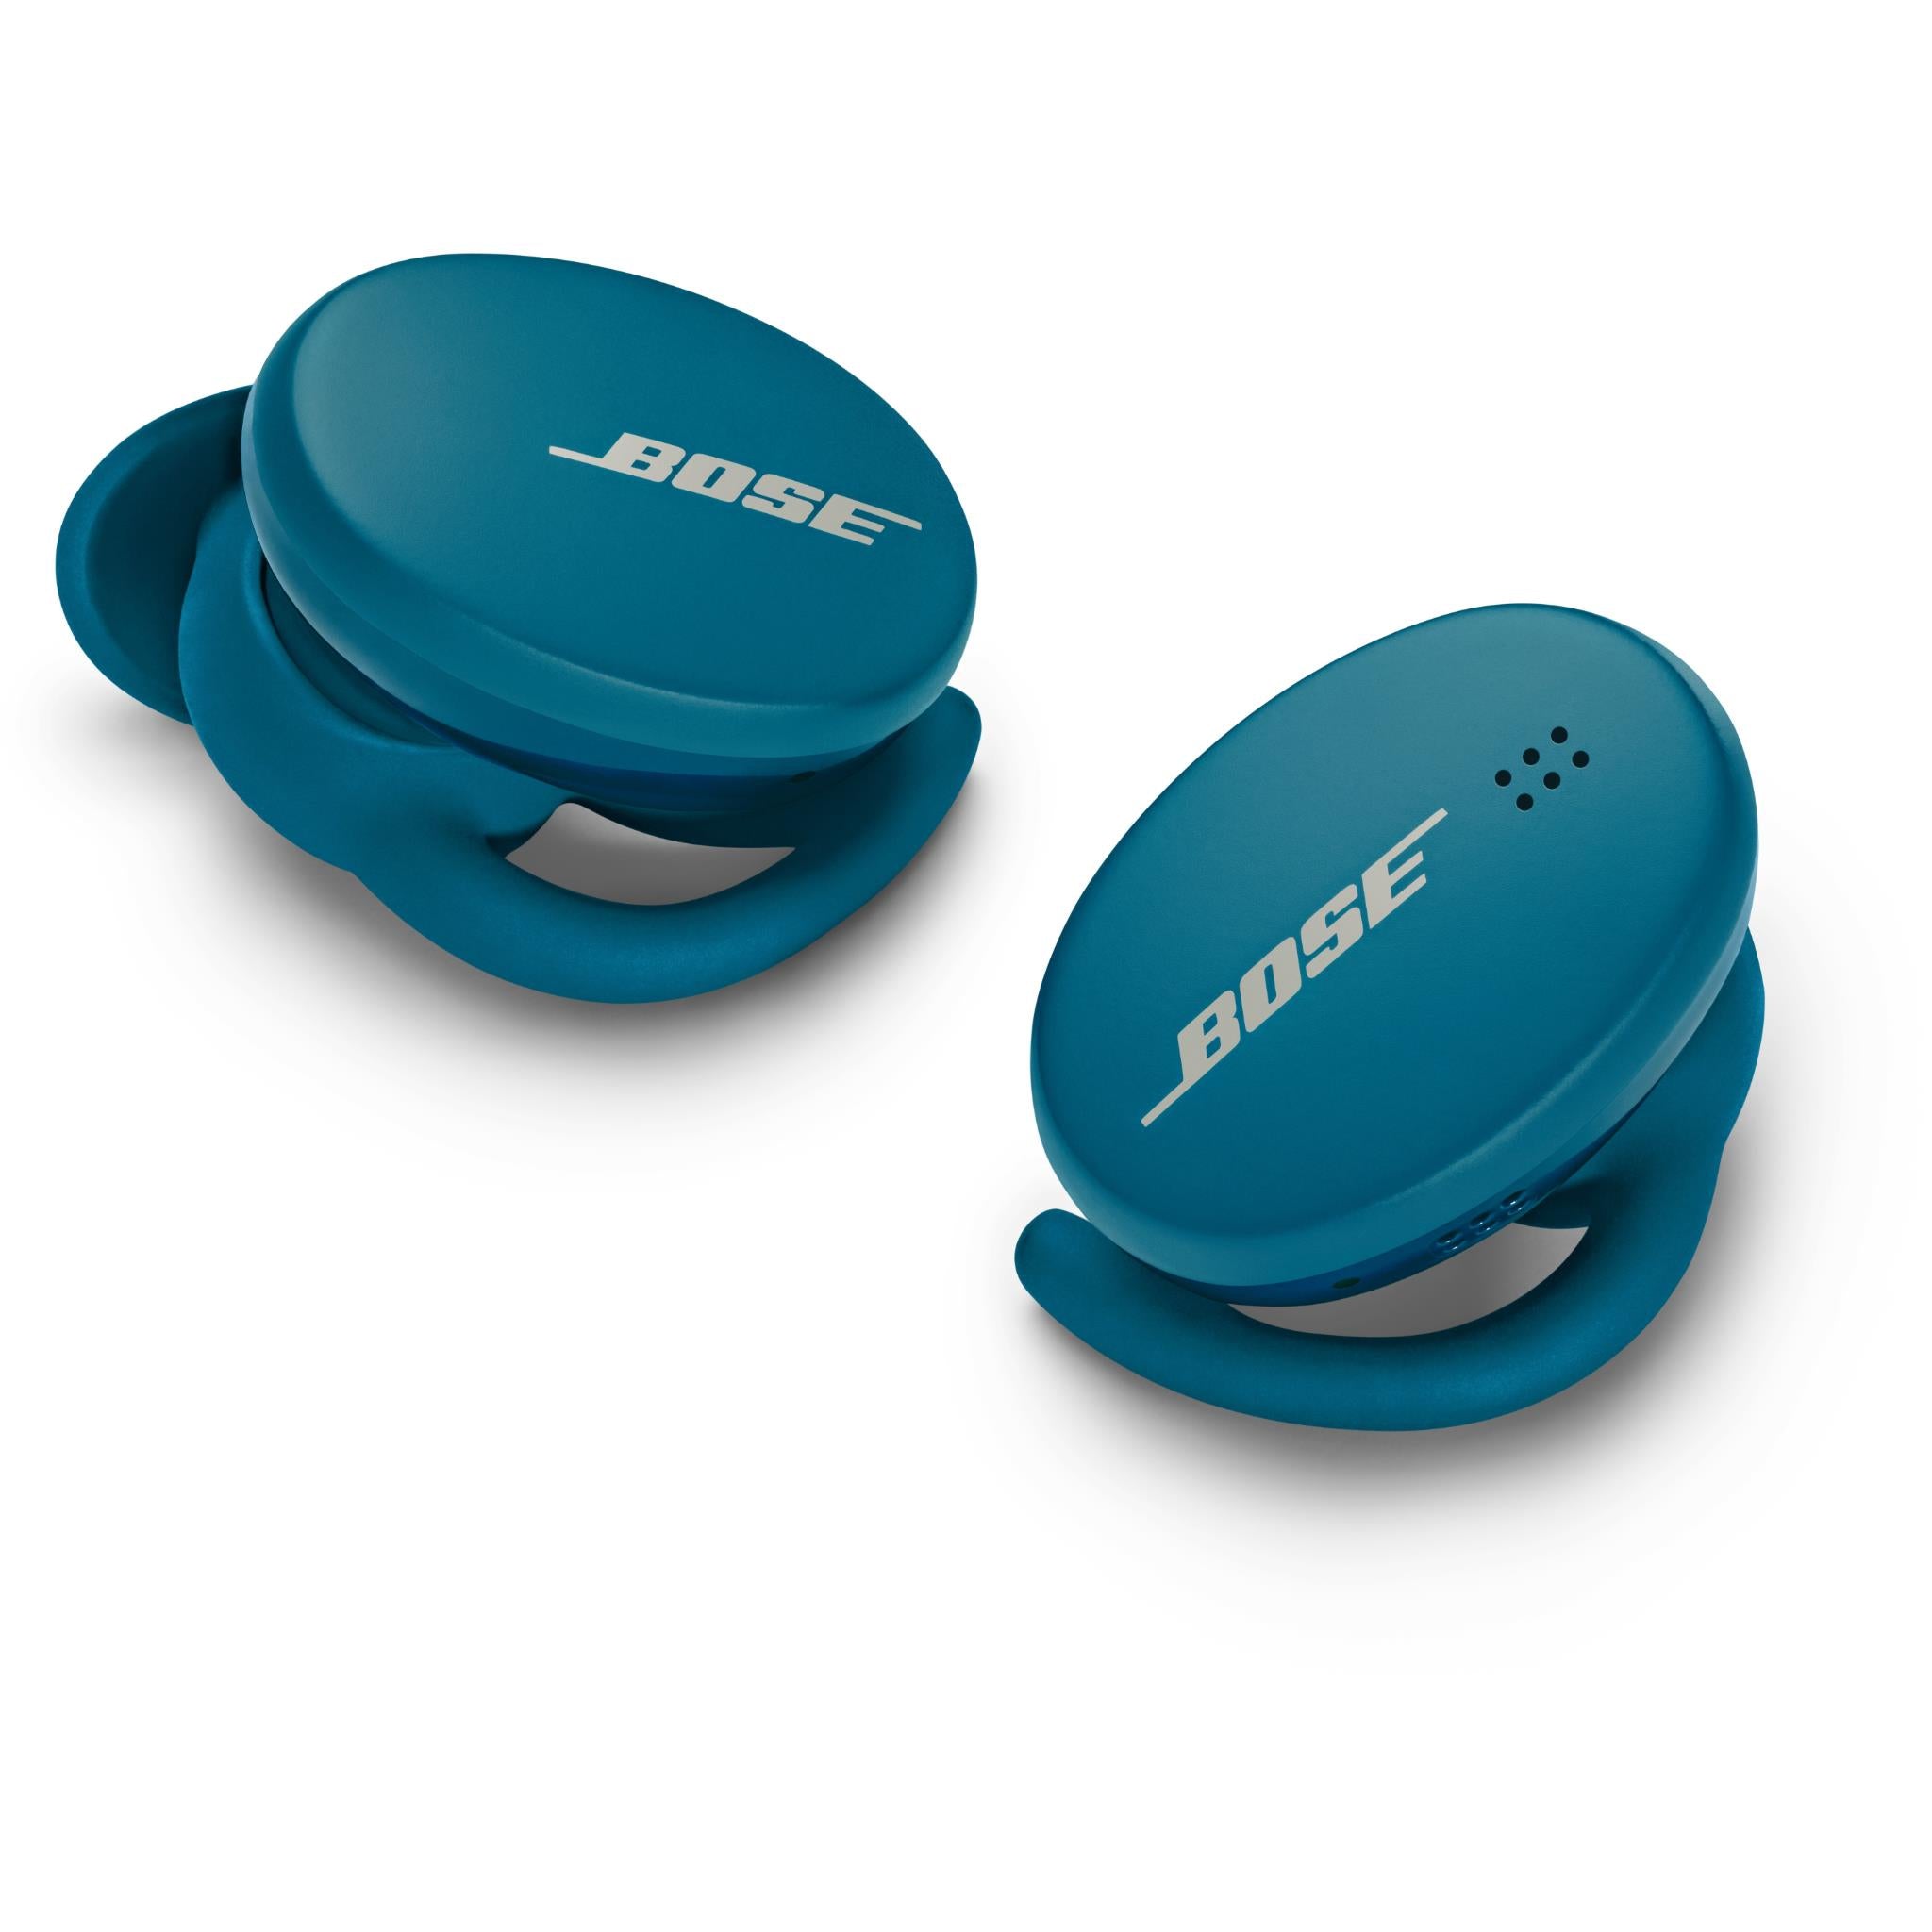 Bose sport earbuds. Bose Sport Earbuds Baltic Blue. Беспроводные наушники Bose Sport Earbuds. Беспроводные наушники Bose Sport Earbuds Blue. Bose QC Earbuds.